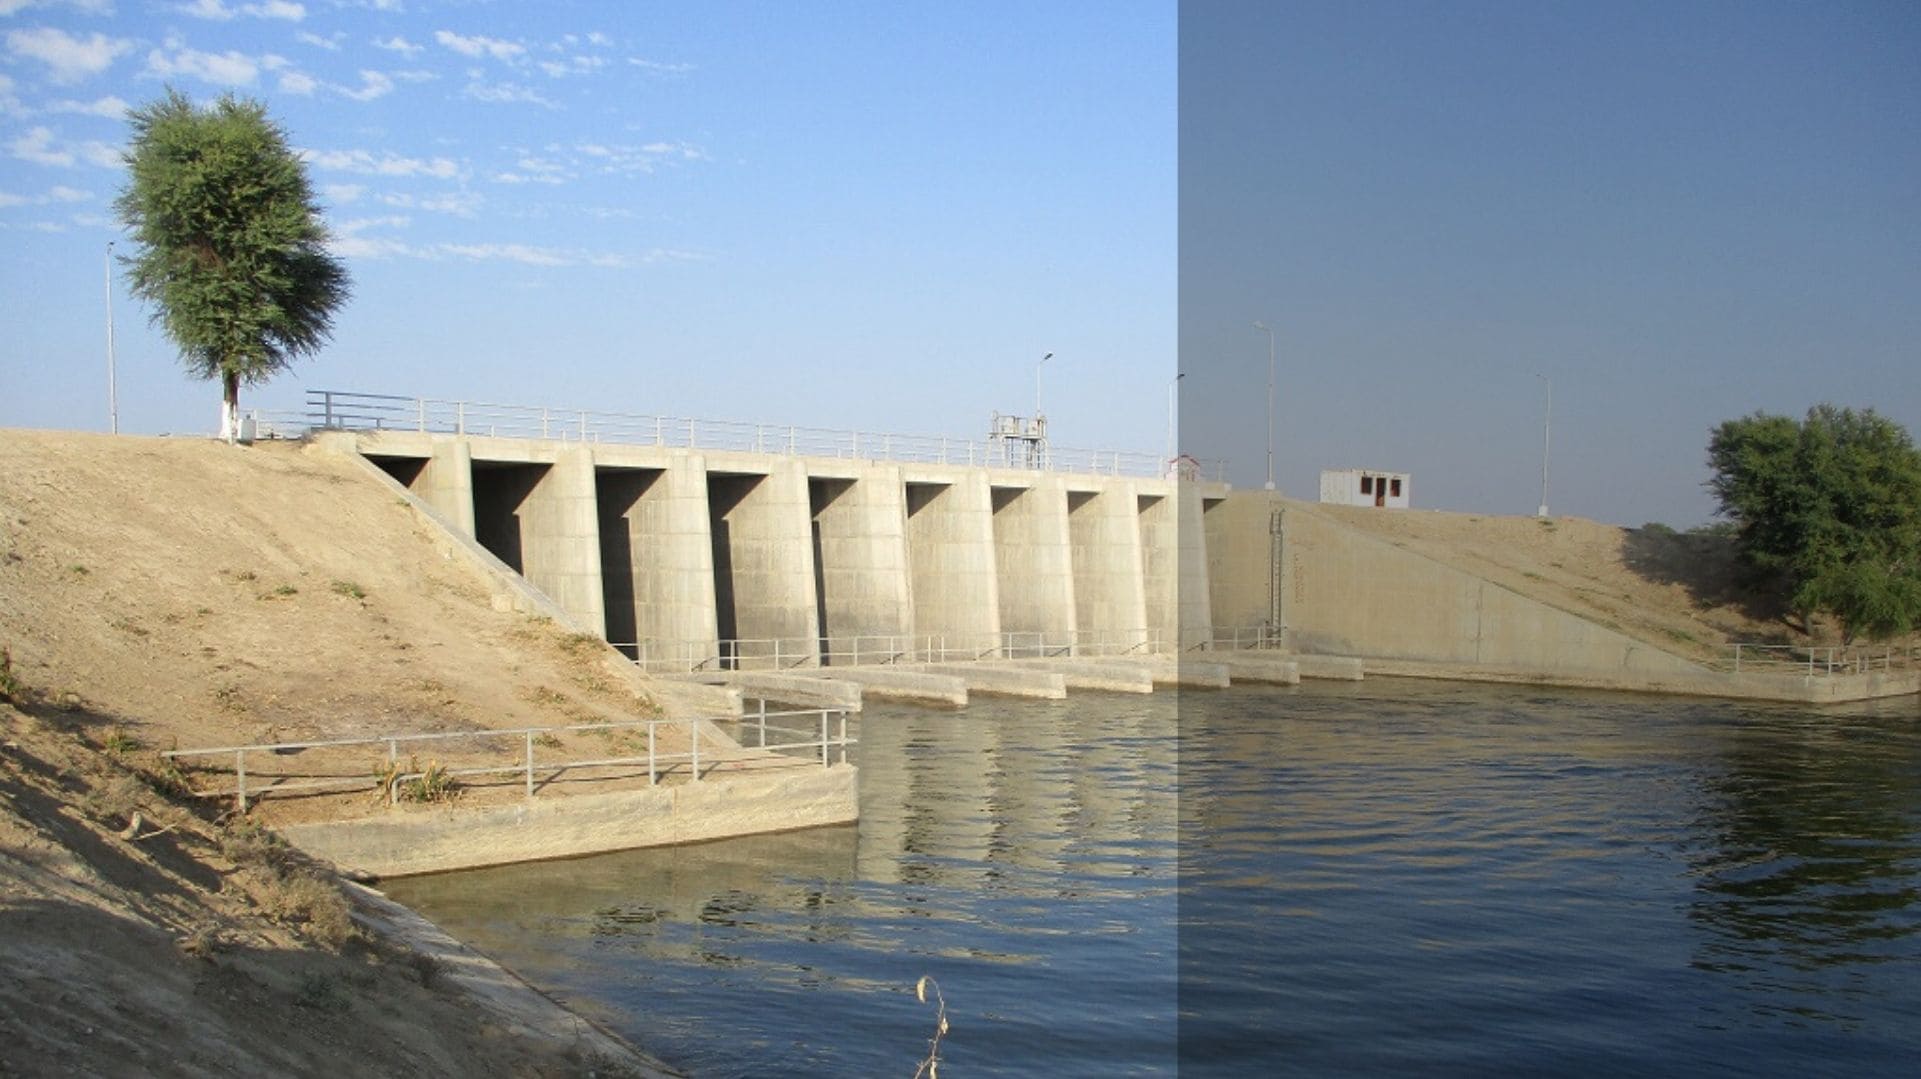 Sindh’s man-made Chotiari reservoir is an environmental disaster, study finds